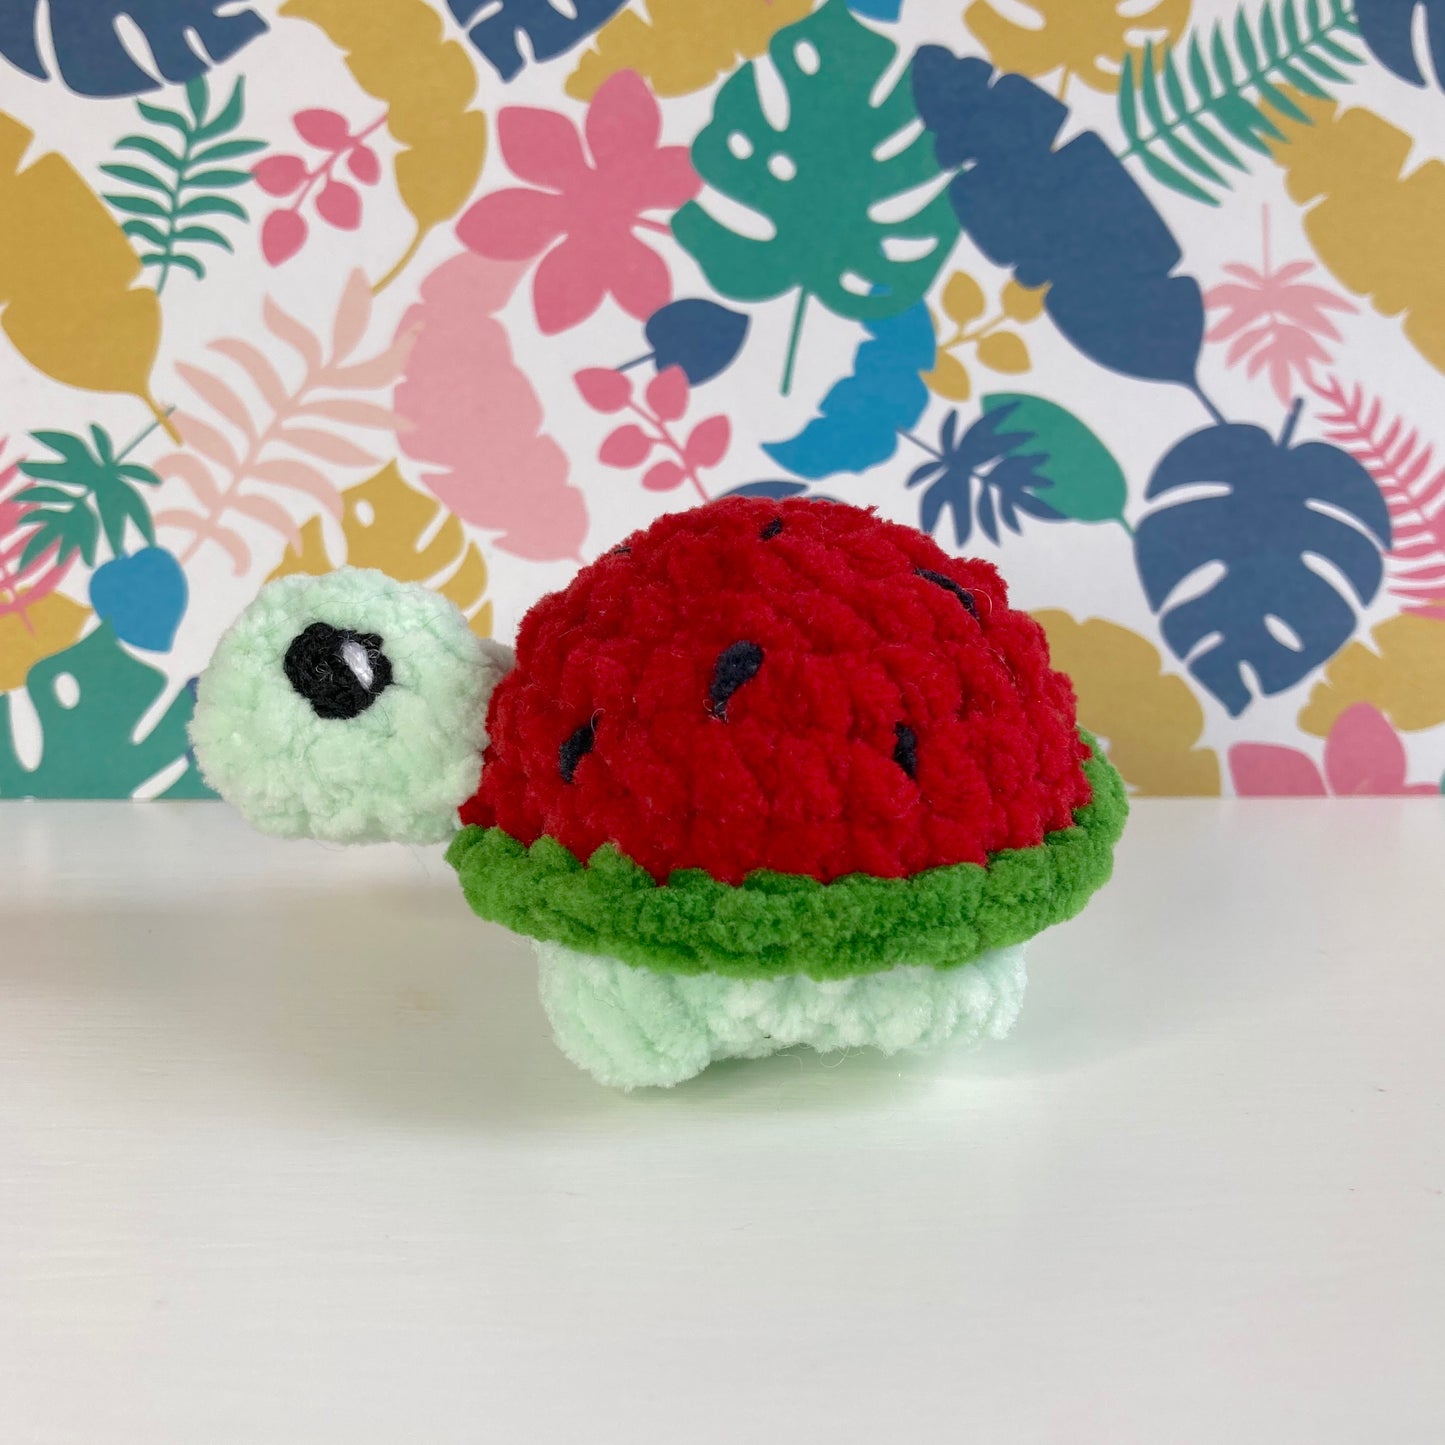 Mini Tortoise Crochet Plush Toy